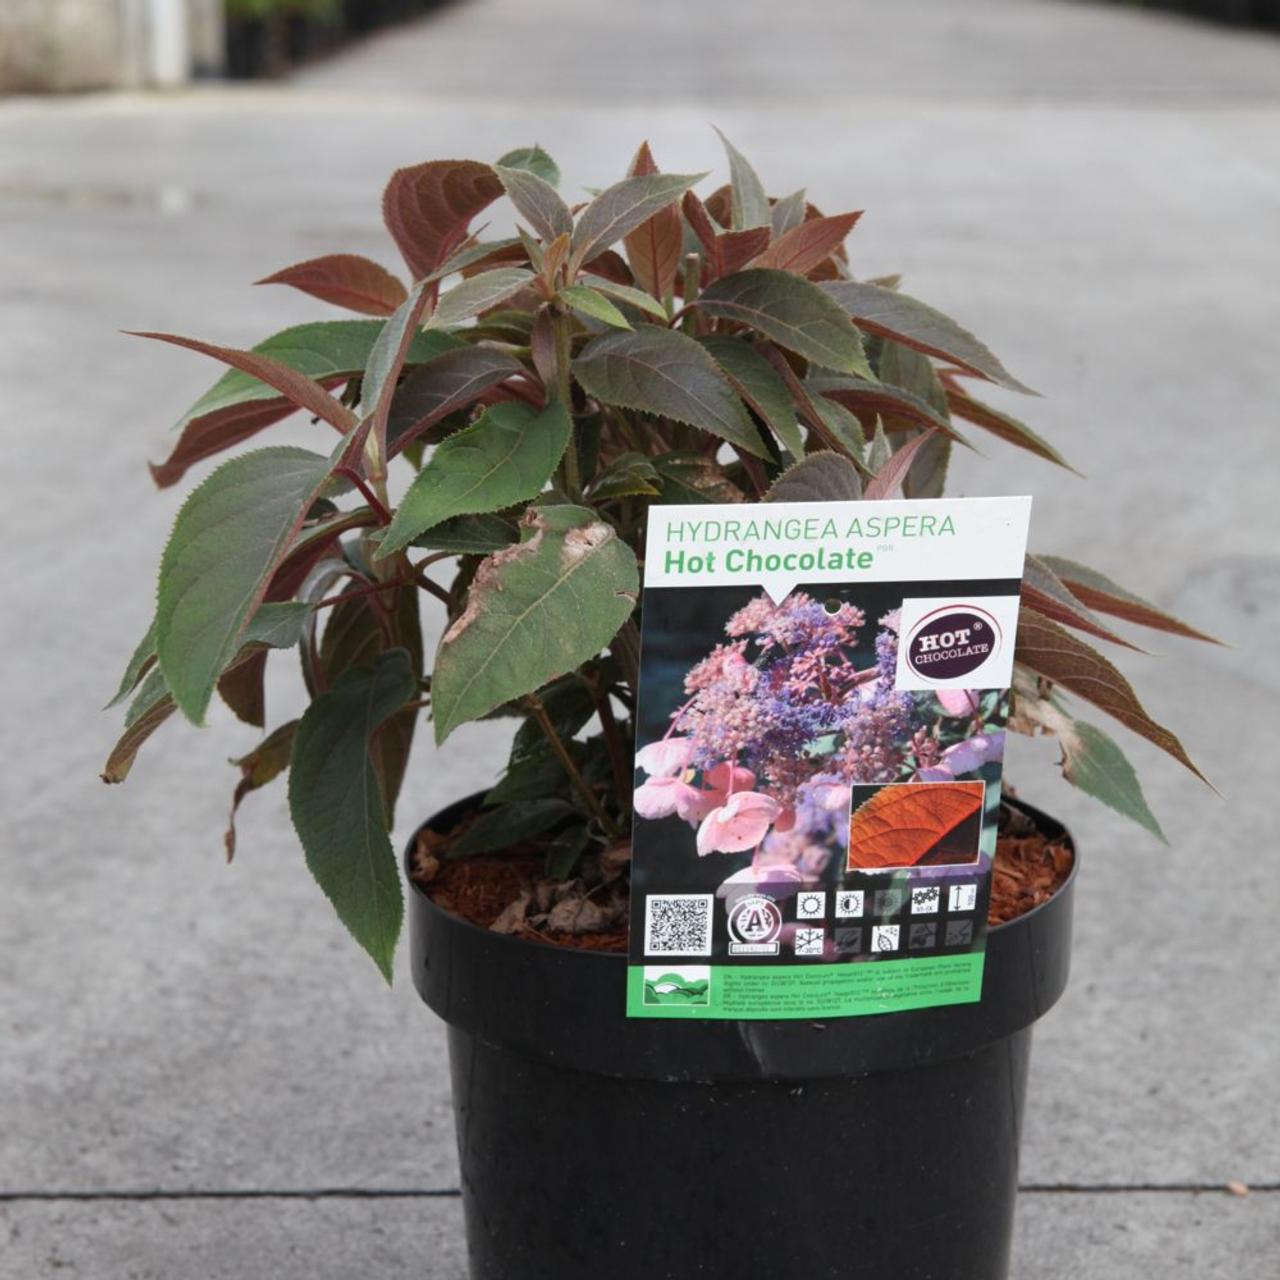 Hydrangea aspera 'Hot Chocolate' plant